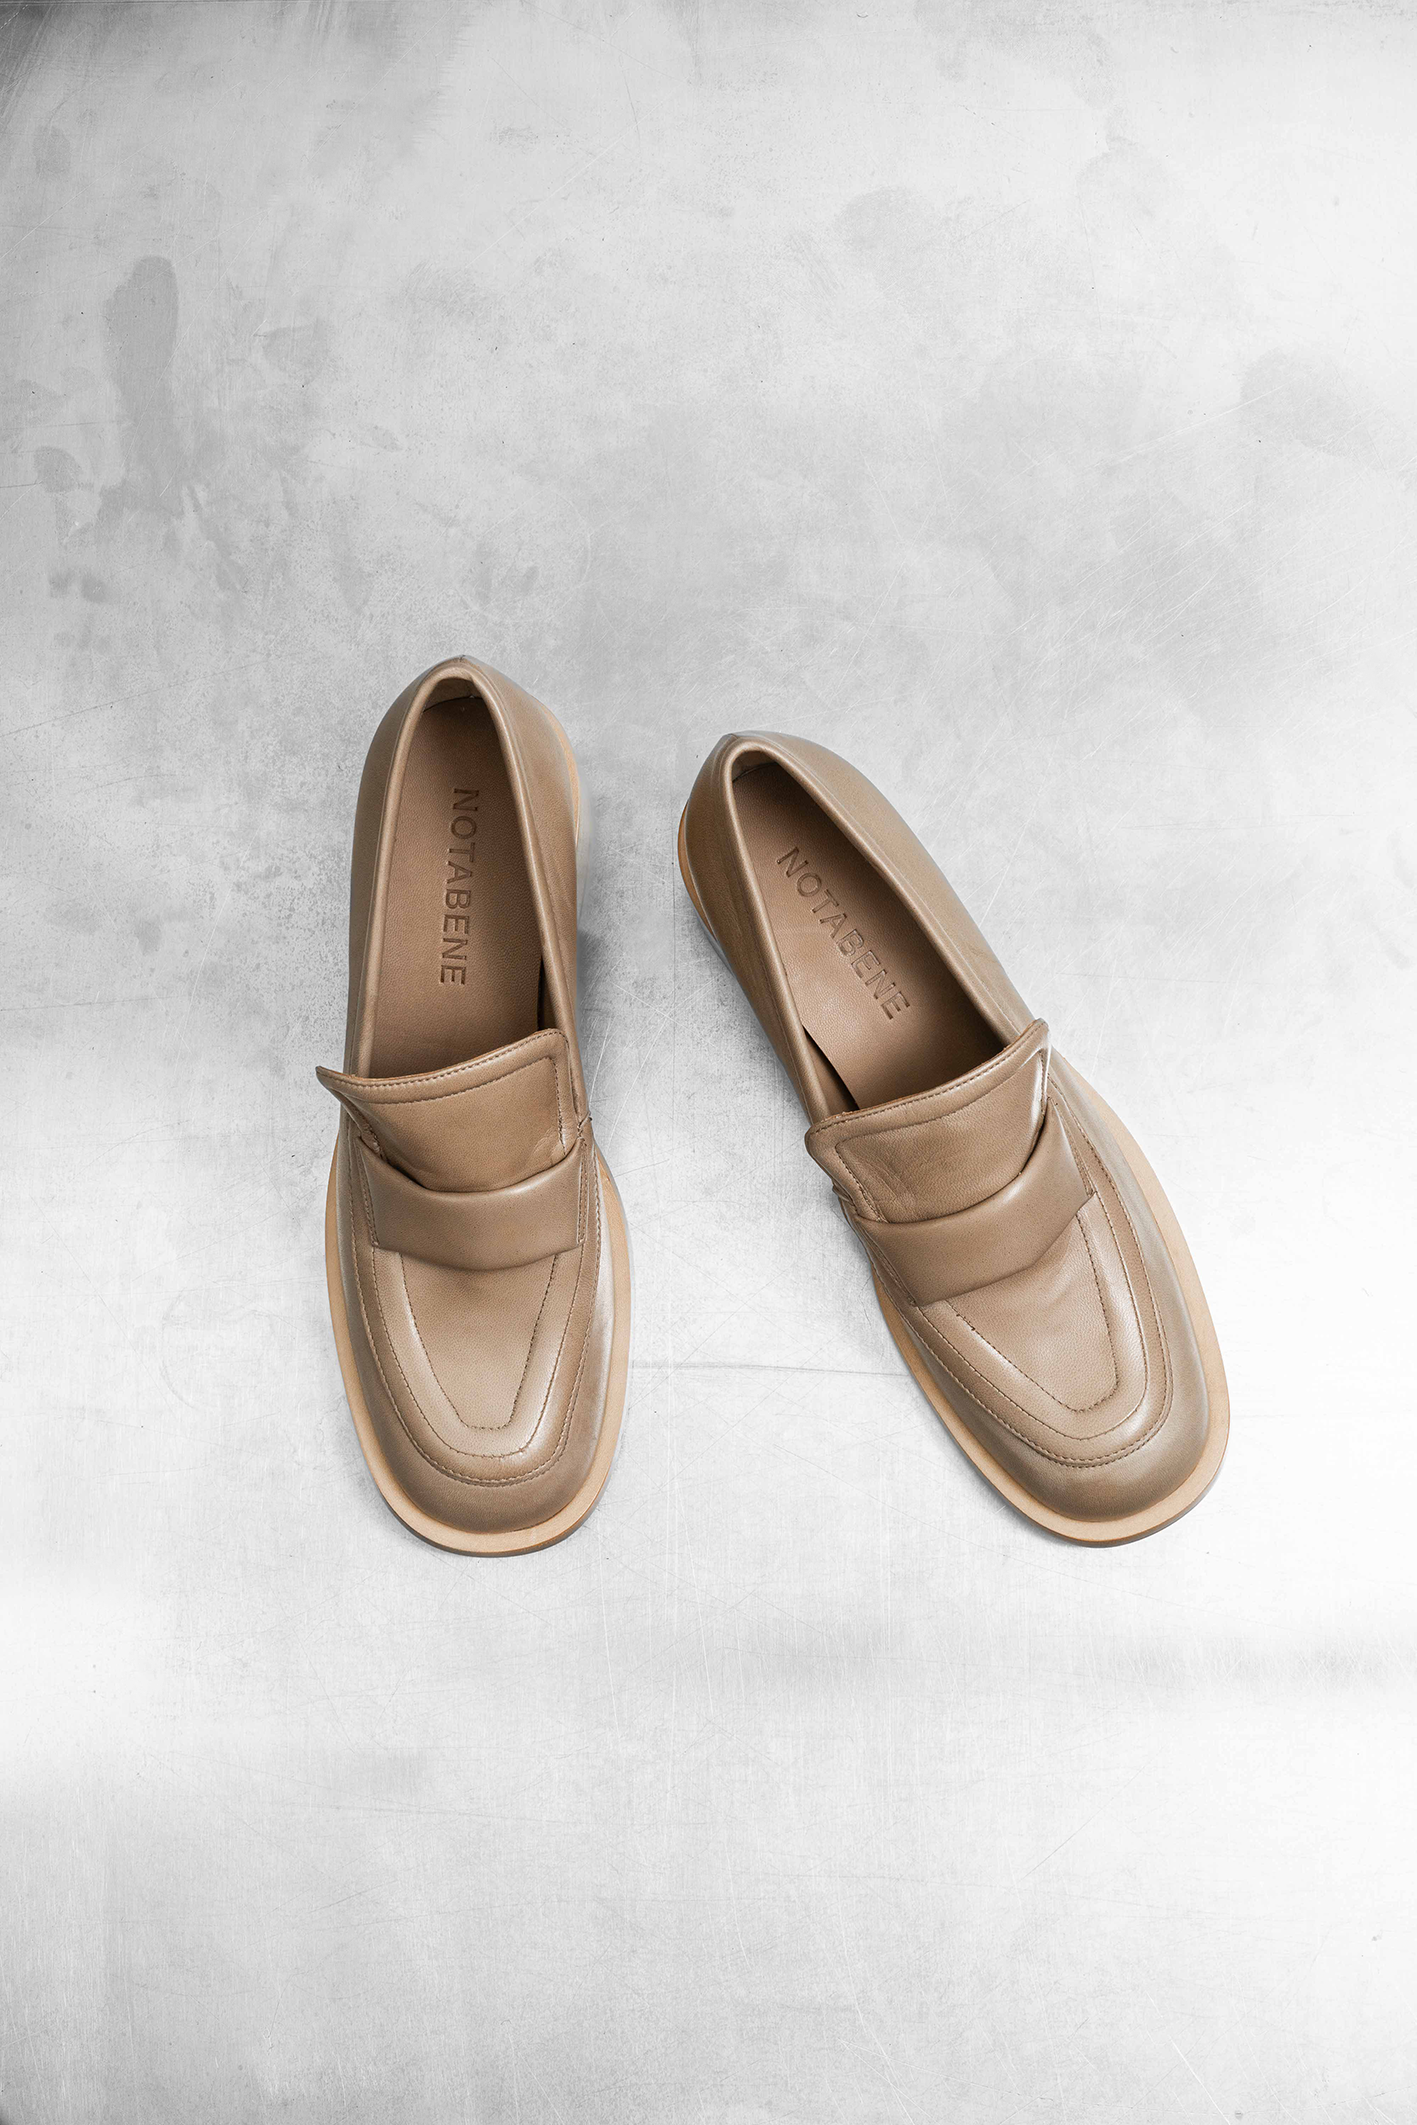 Vera loafers, nude leather